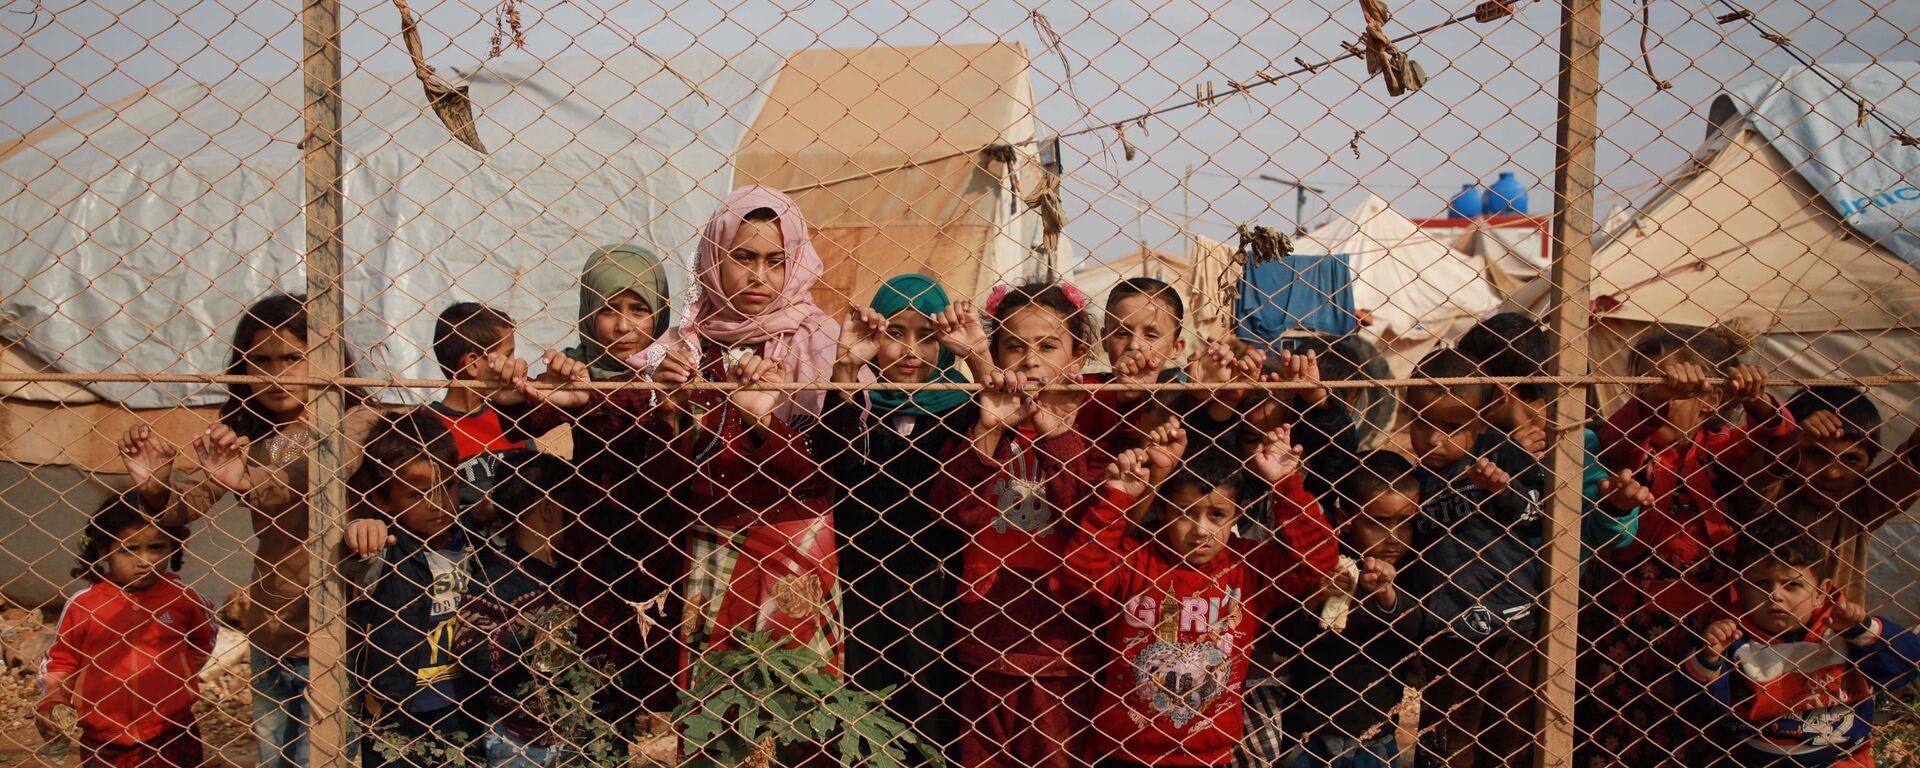 Сирийские дети у забора палаточного лагеря недалеко от деревни Кафр-Лусин, Сирия - Sputnik Таджикистан, 1920, 08.02.2021